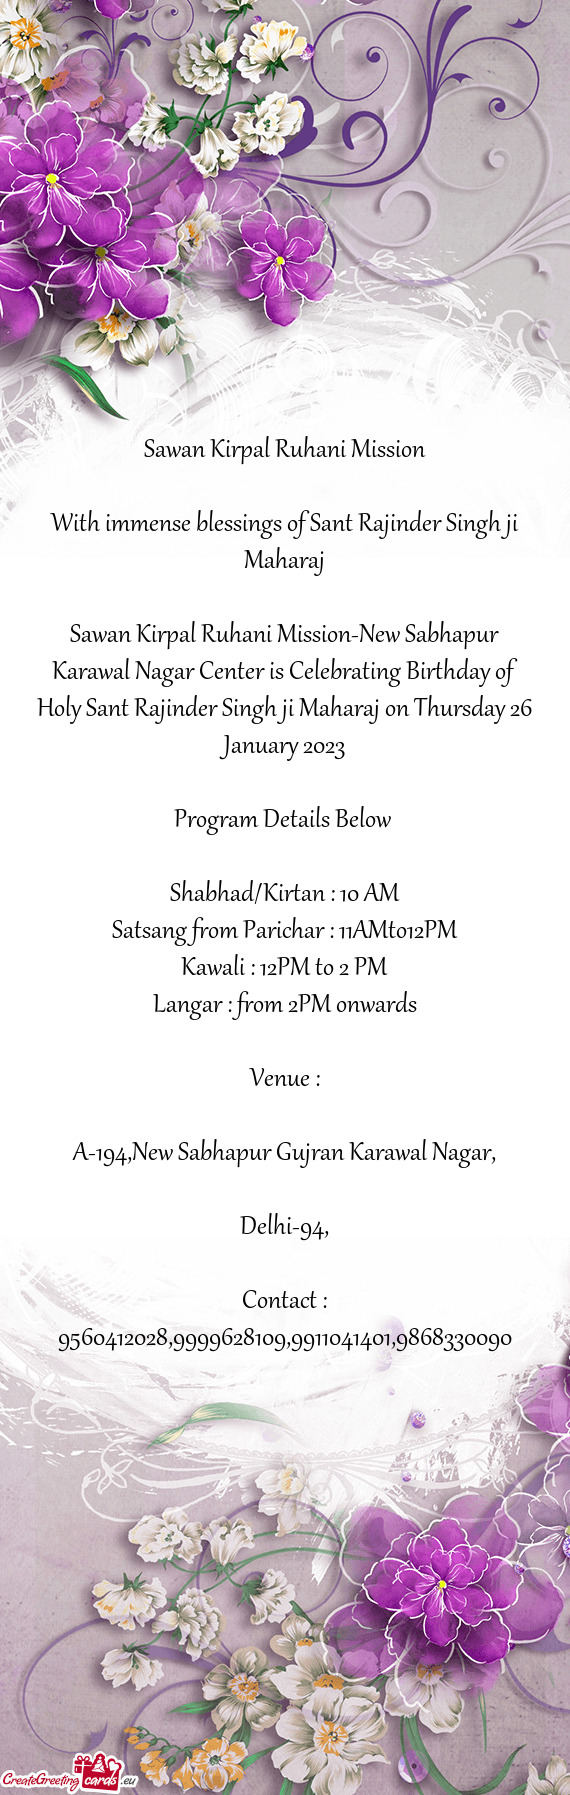 With immense blessings of Sant Rajinder Singh ji Maharaj